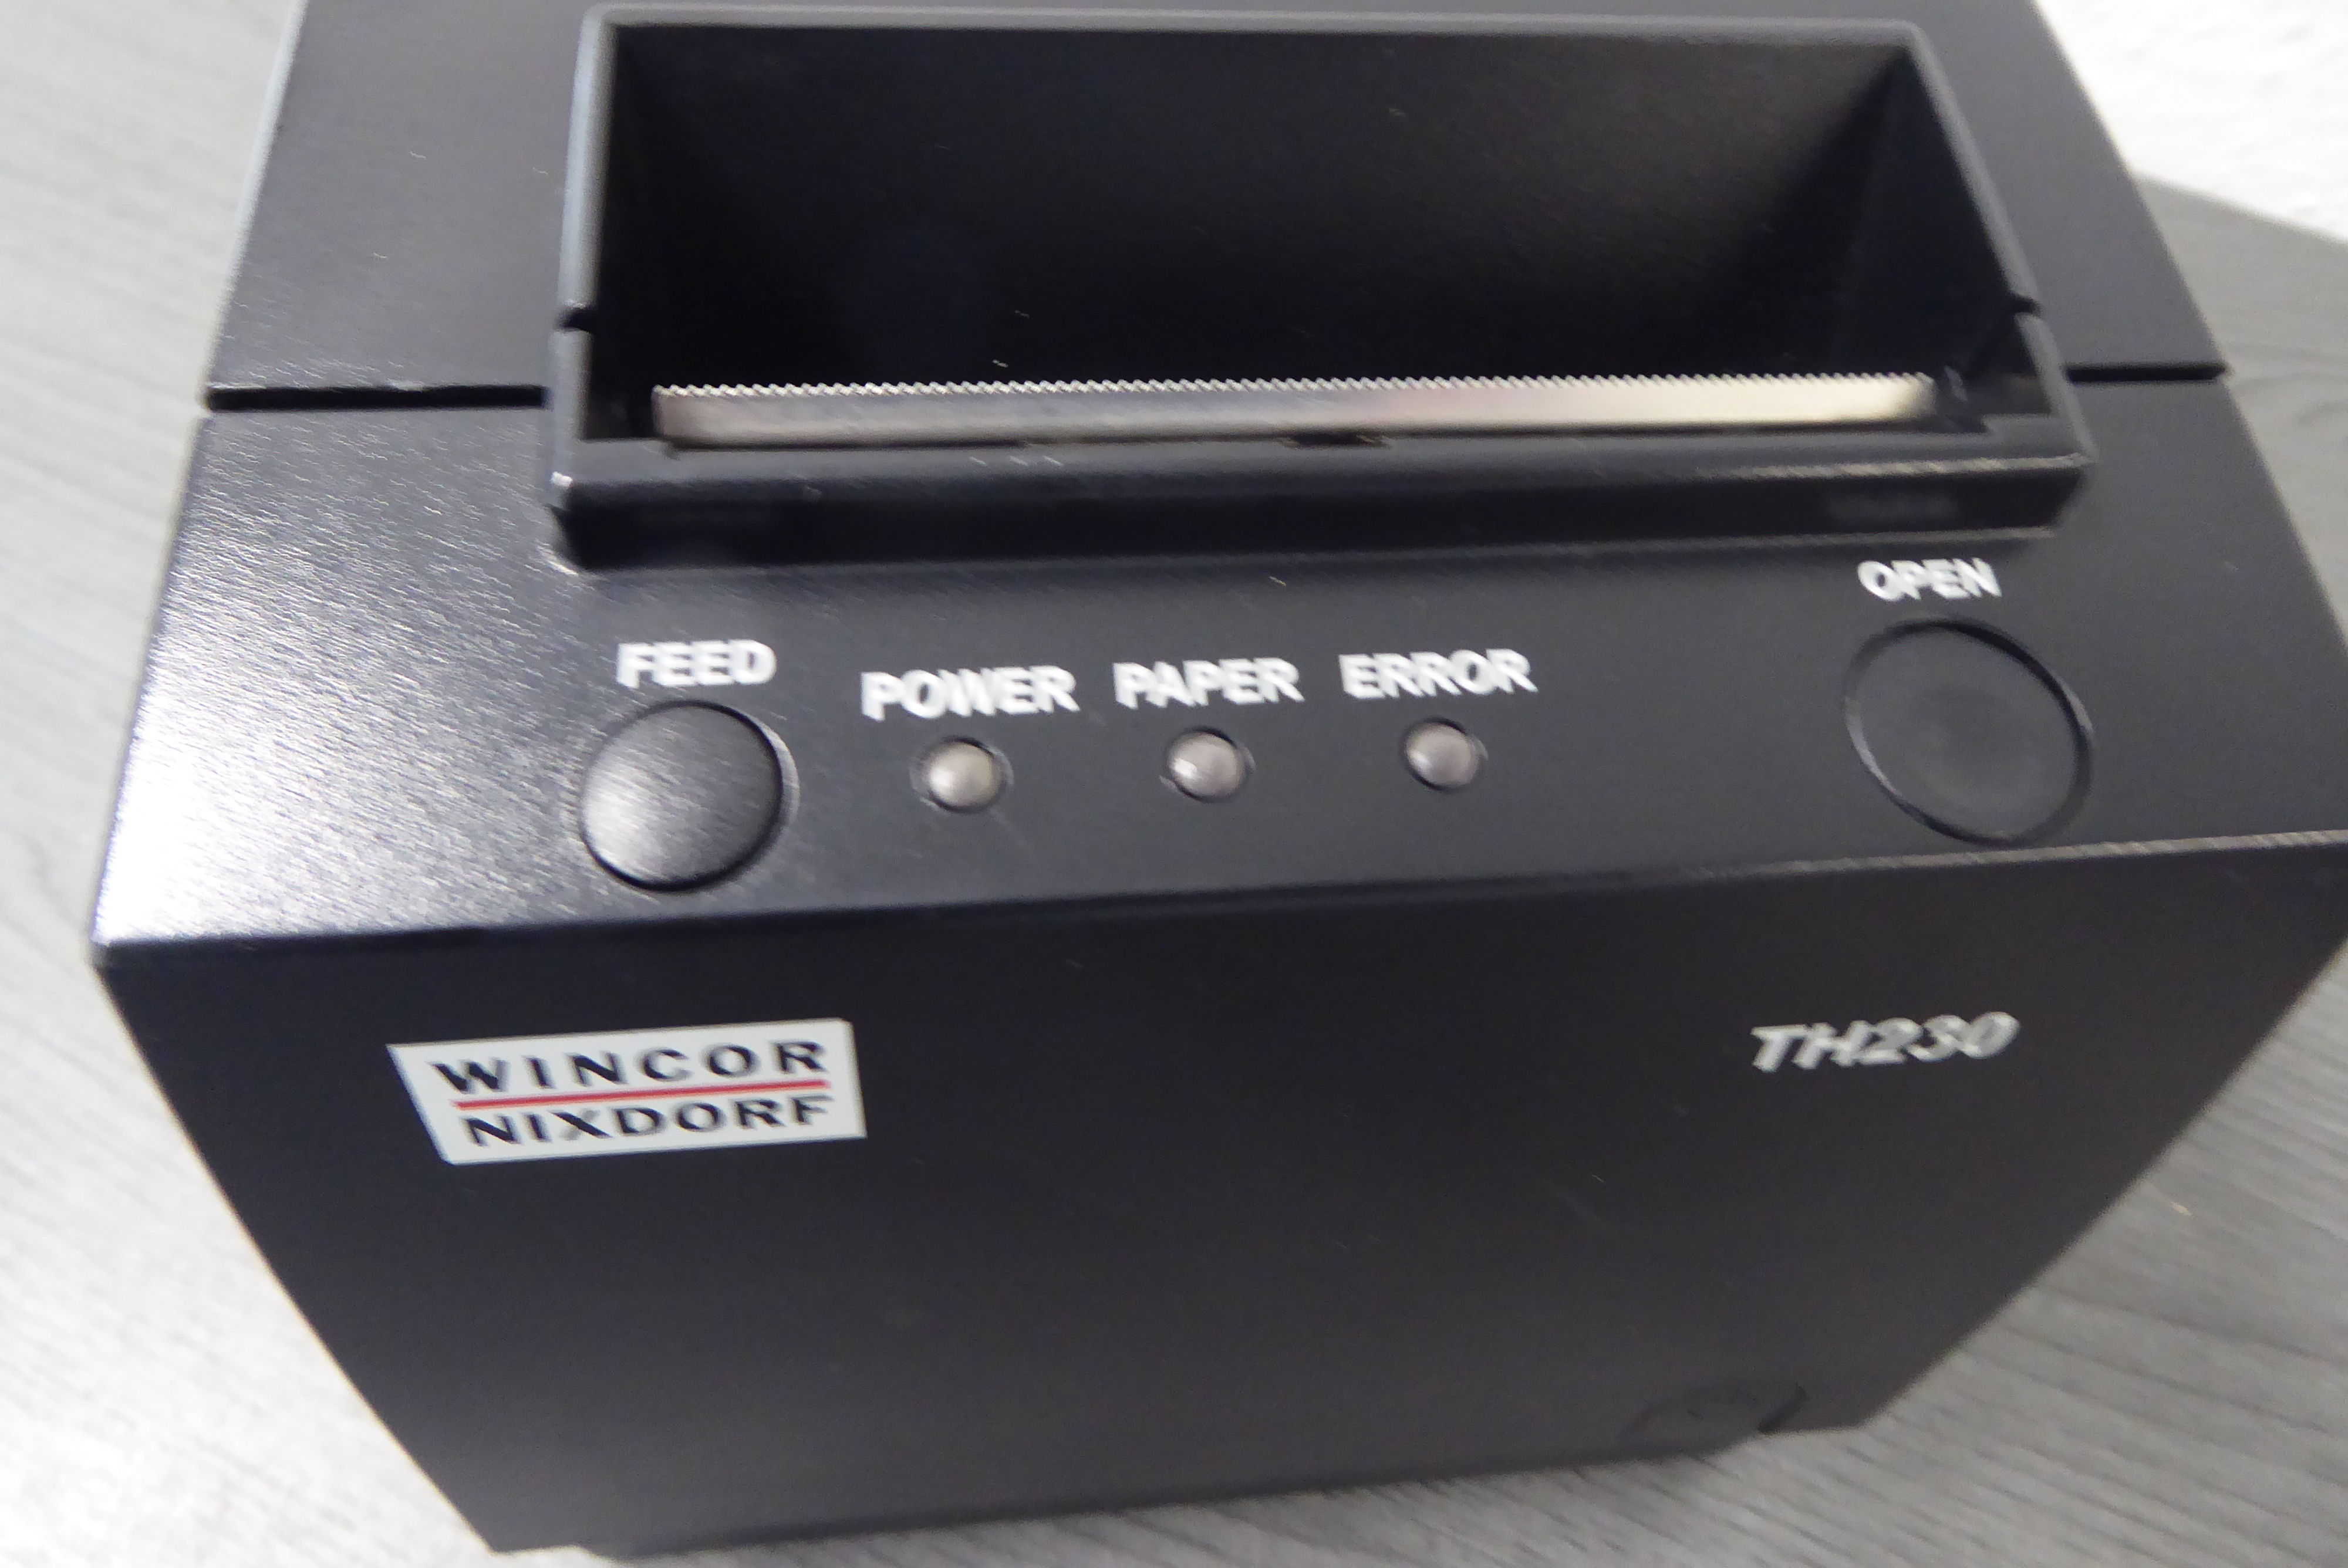 KASSENPRINTER BONDRUCKER WINCOR NIXDORF TH230  USB 24V KAB 